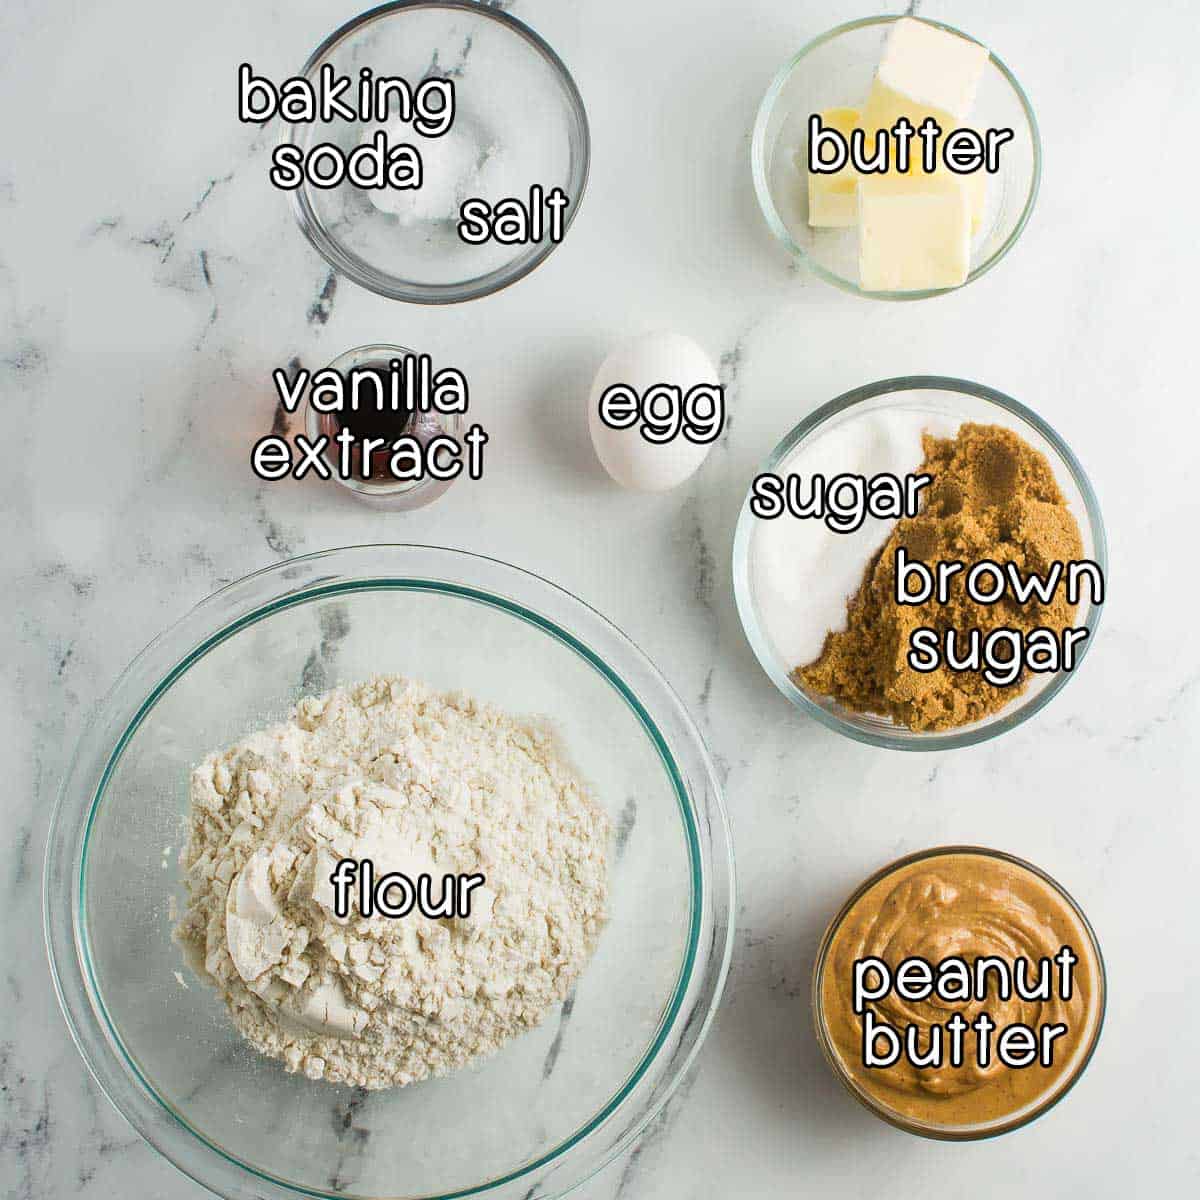 Overhead shot of ingredients - flour, vanilla extract, baking soda, salt, egg, butter, sugar, brown sugar, and peanut butter.